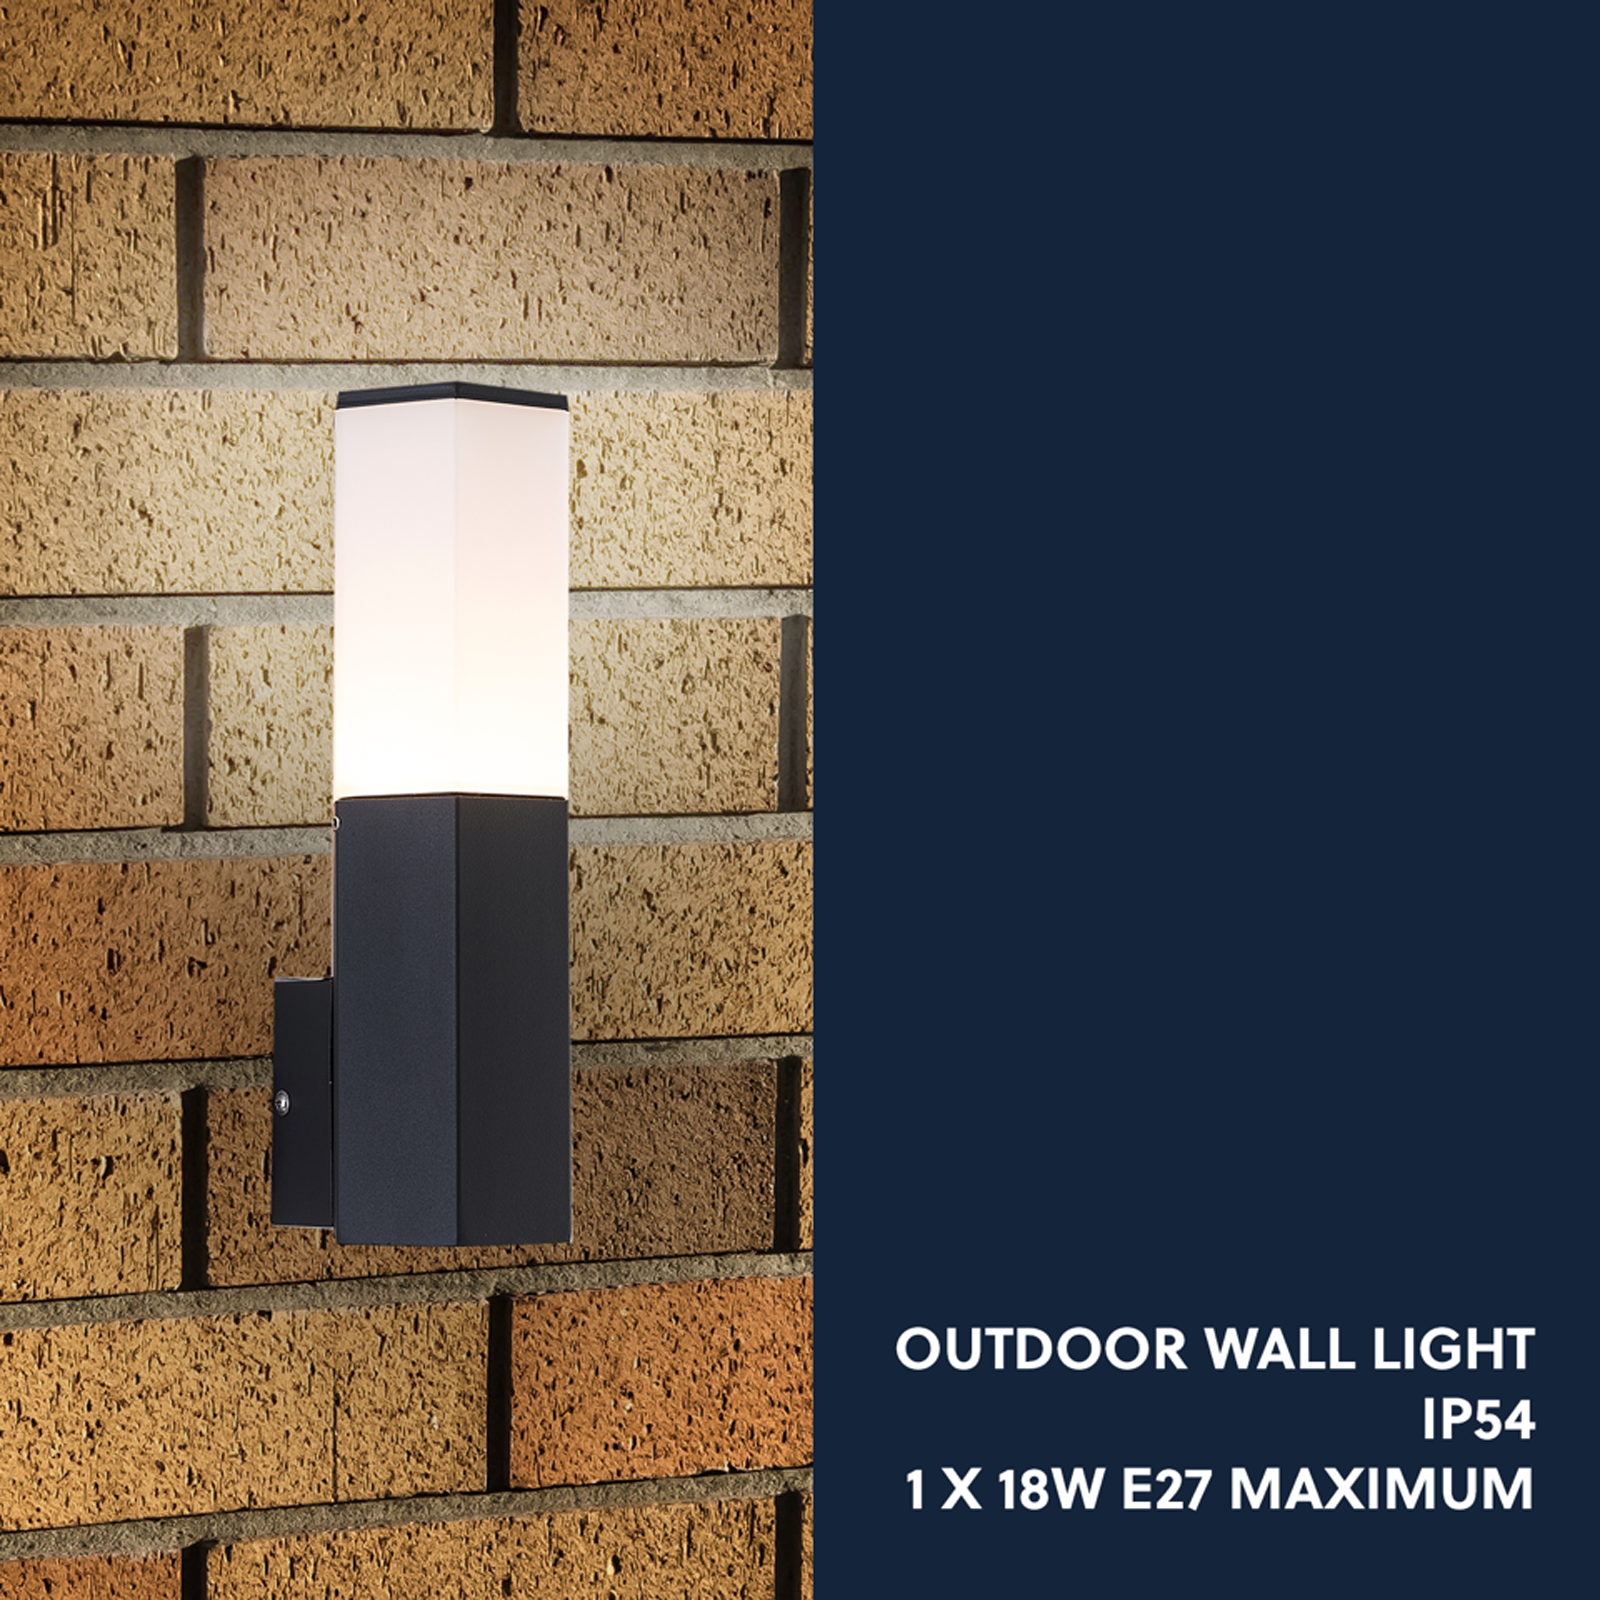 Outdoor Wall Light Waterproof IP54, Grey Finish, Hexagonal design, E27 Bulb Cap, LED Compatible, Ideal for Walkway, Courtyard, Garden, Park, Class 1 (Earth)